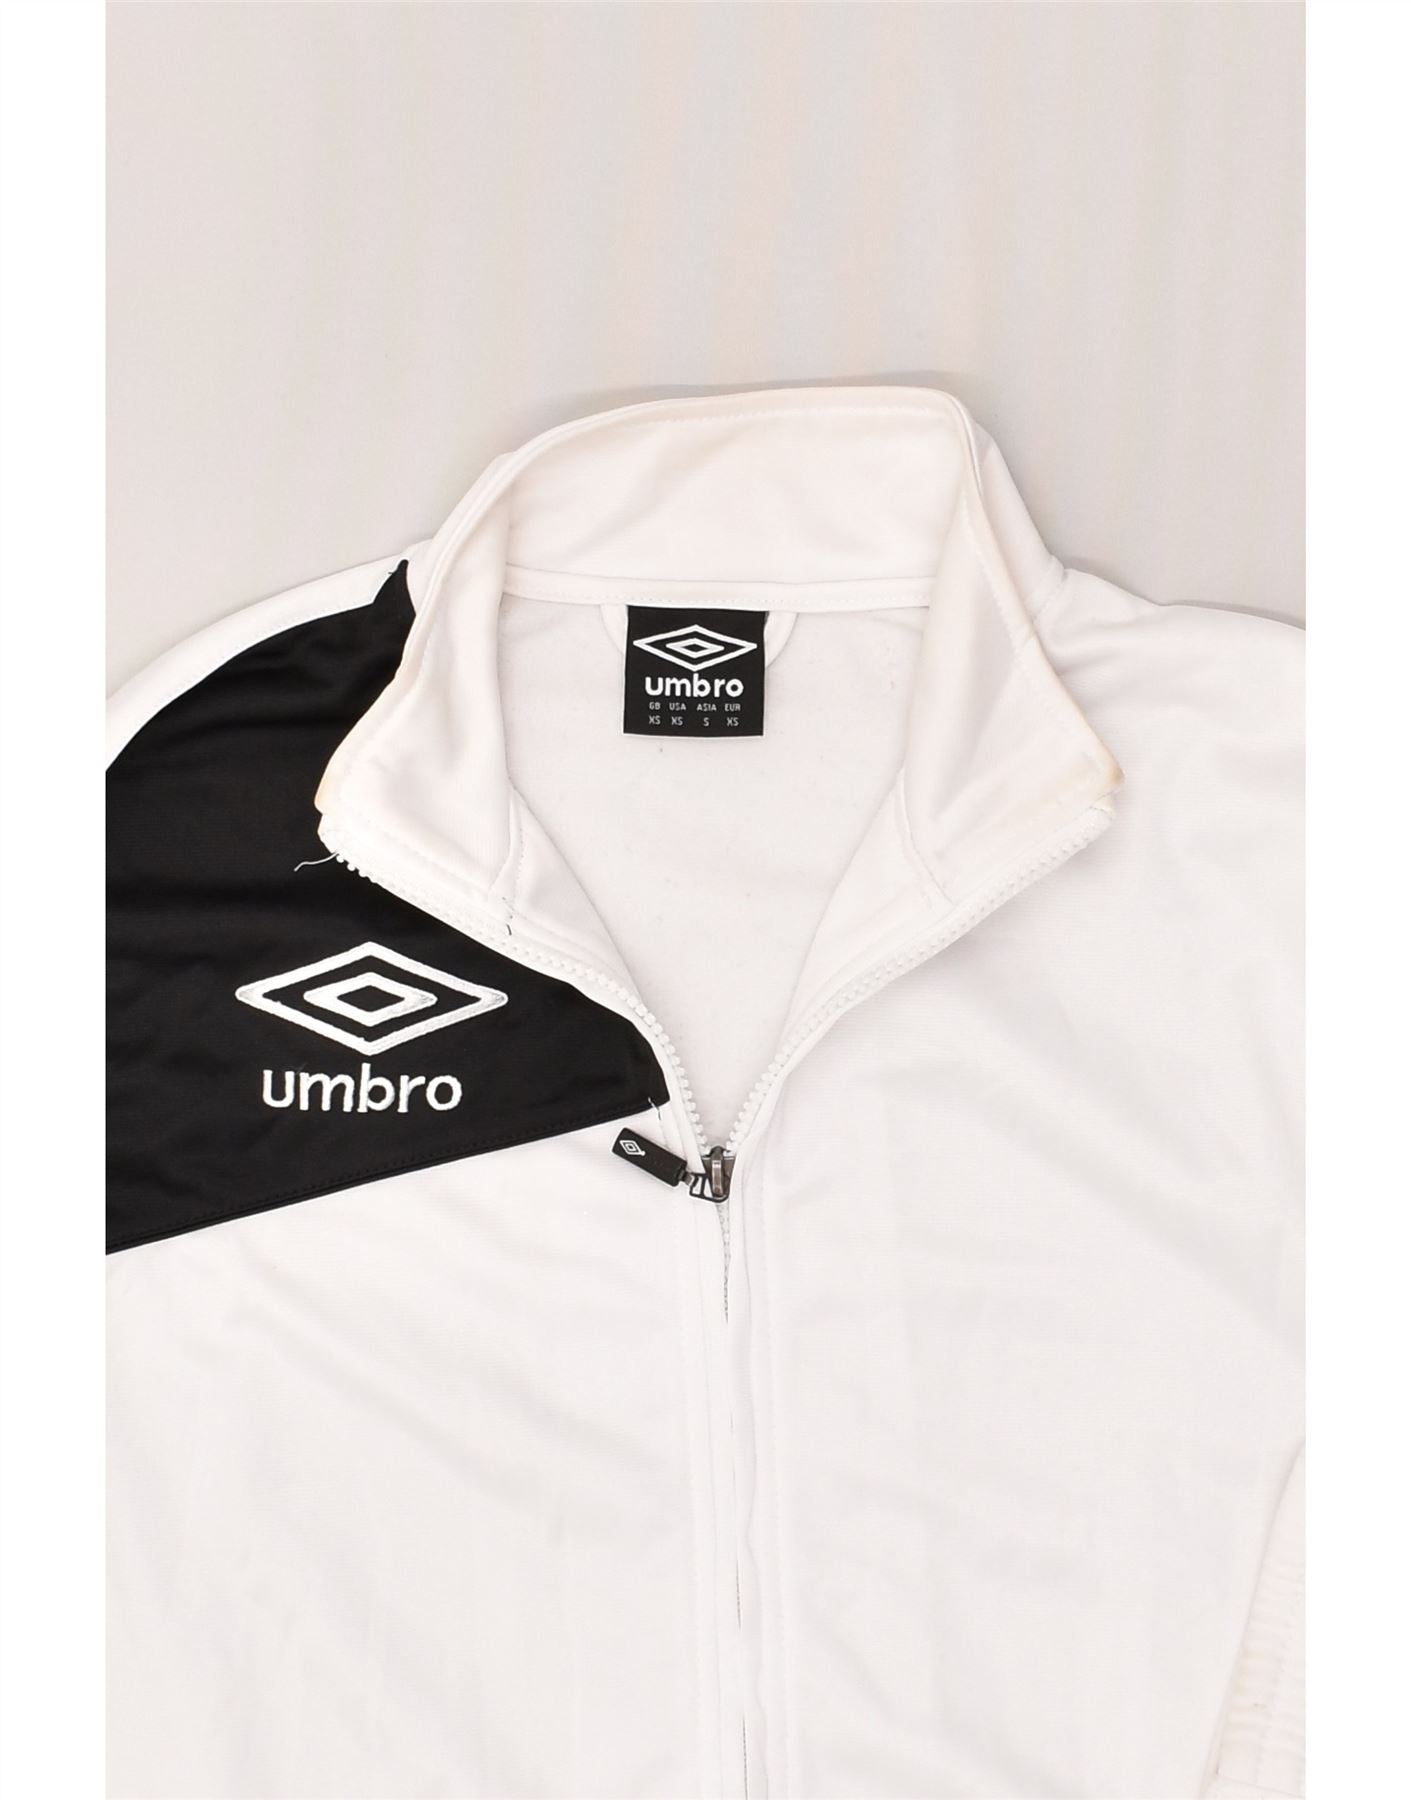 UMBRO Mens Tracksuit Top Jacket XS White Colourblock Polyester 